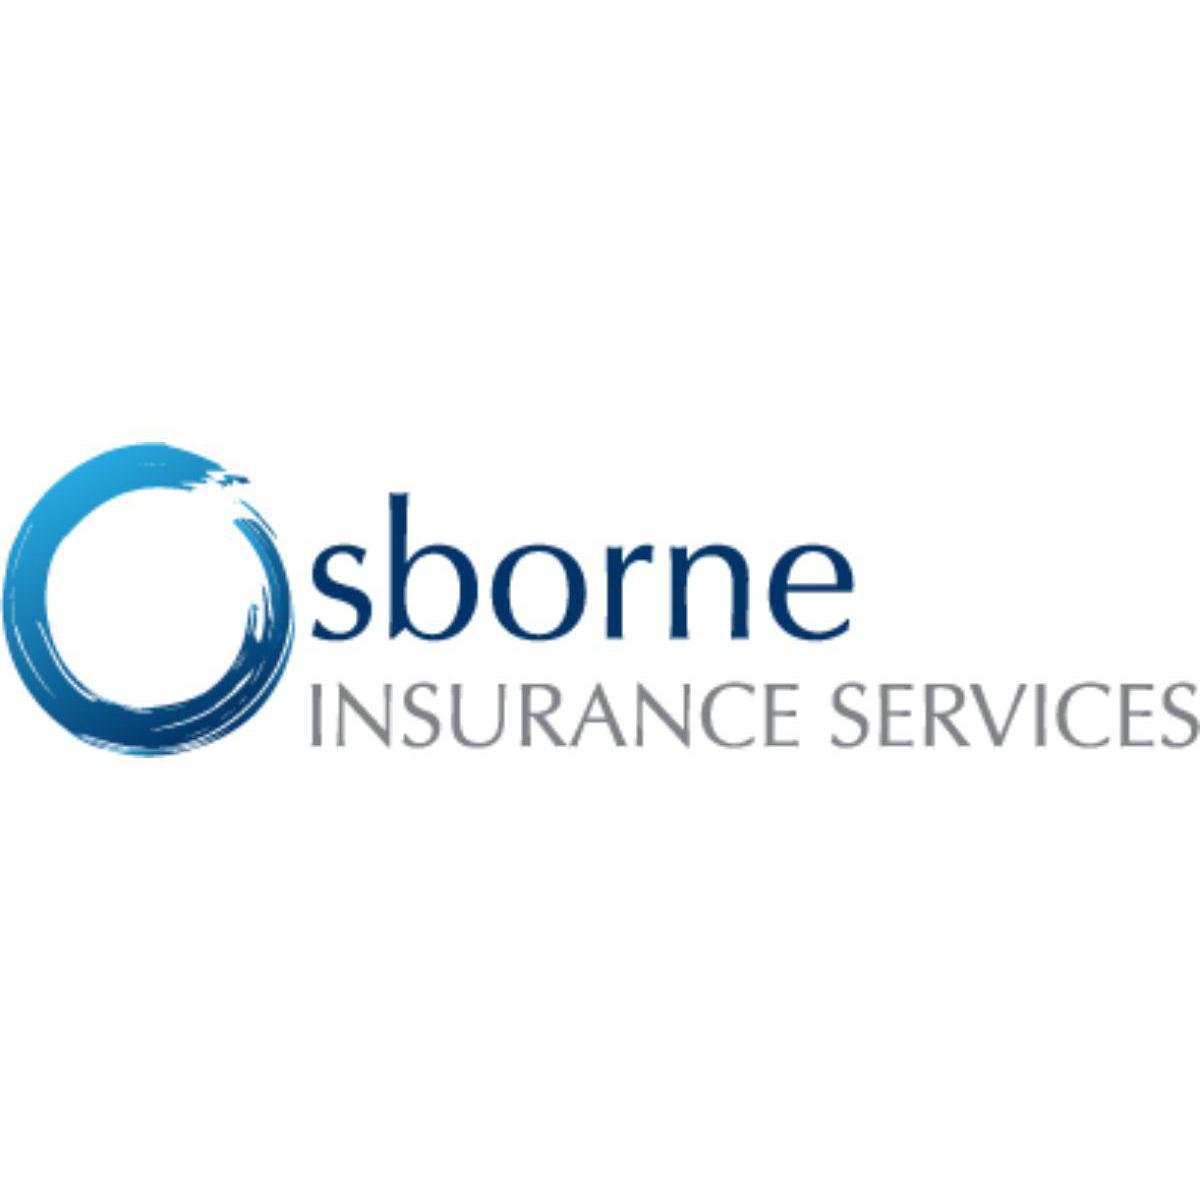 Osborne Insurance Services Raleigh (919)845-9955